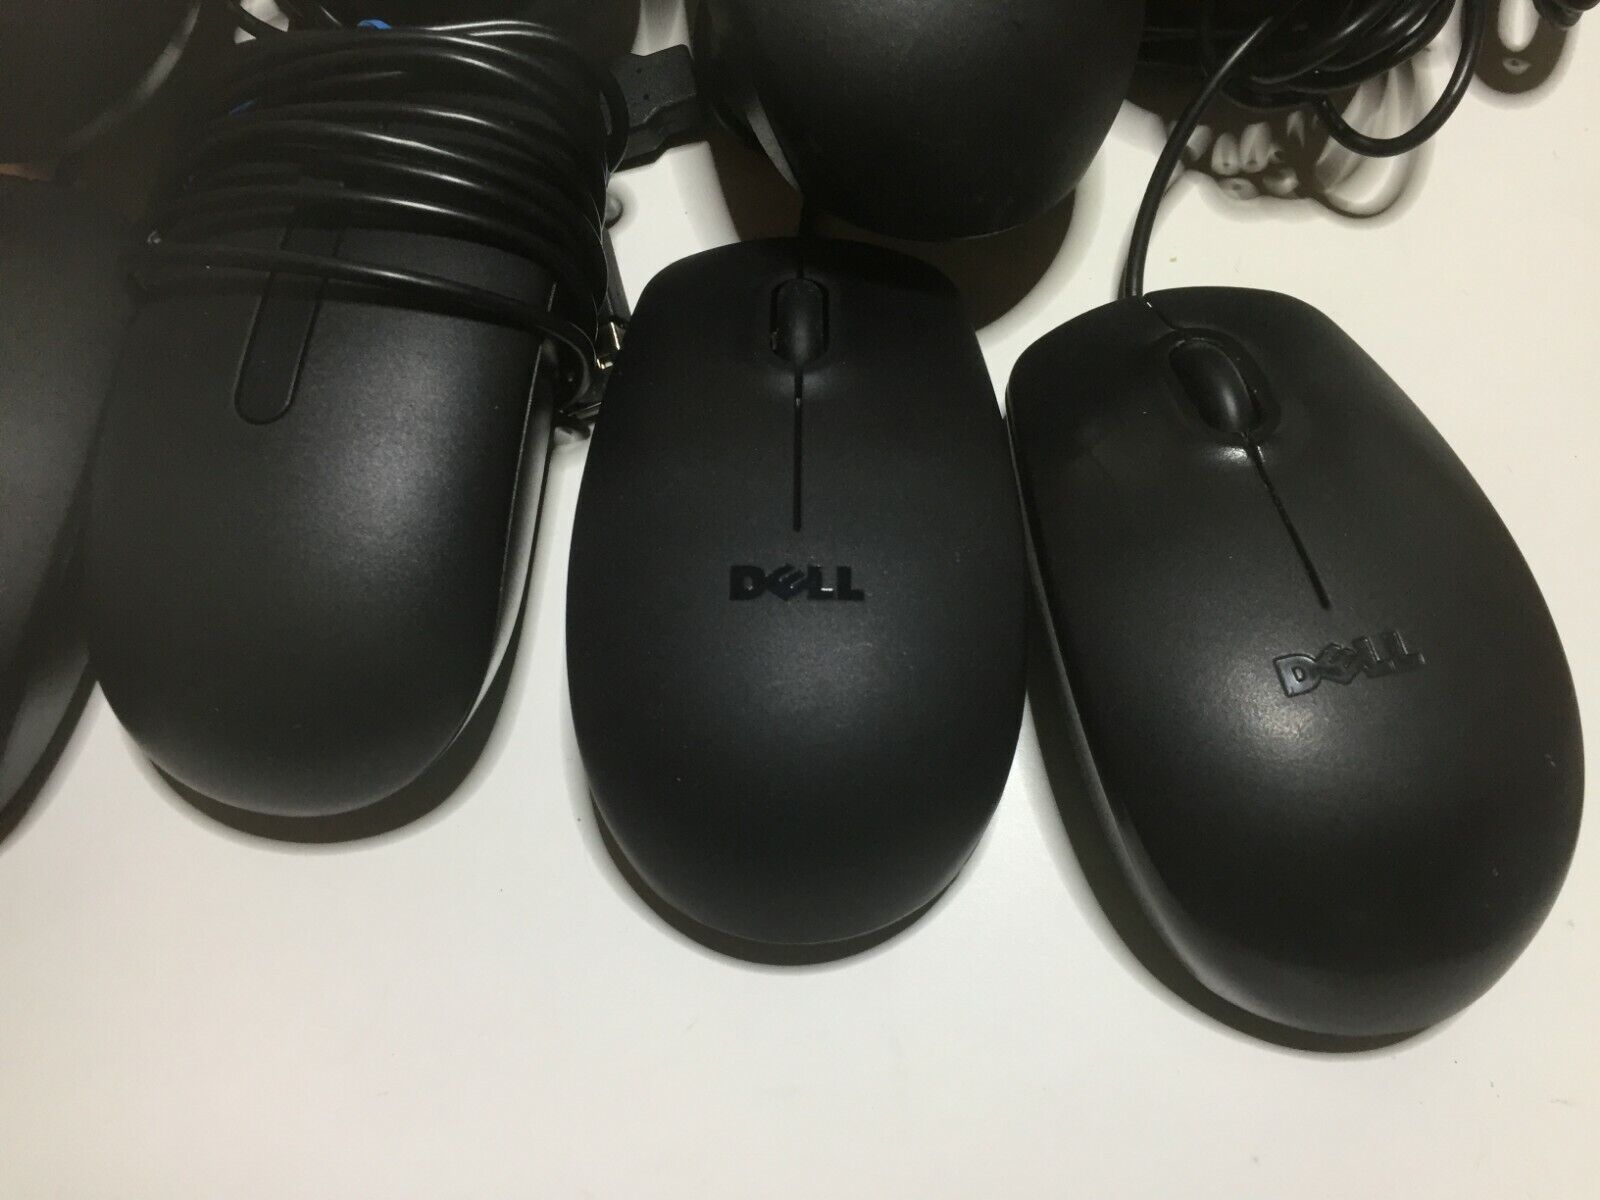 Lot of 10 Dell Black USB Optical Mouse w/ Scroll Wheel 11D3V 5Y2RG 356WK 9RRC7  Dell MS111-P 5Y2RG 11D3V RGR5X KW2YH - фотография #2